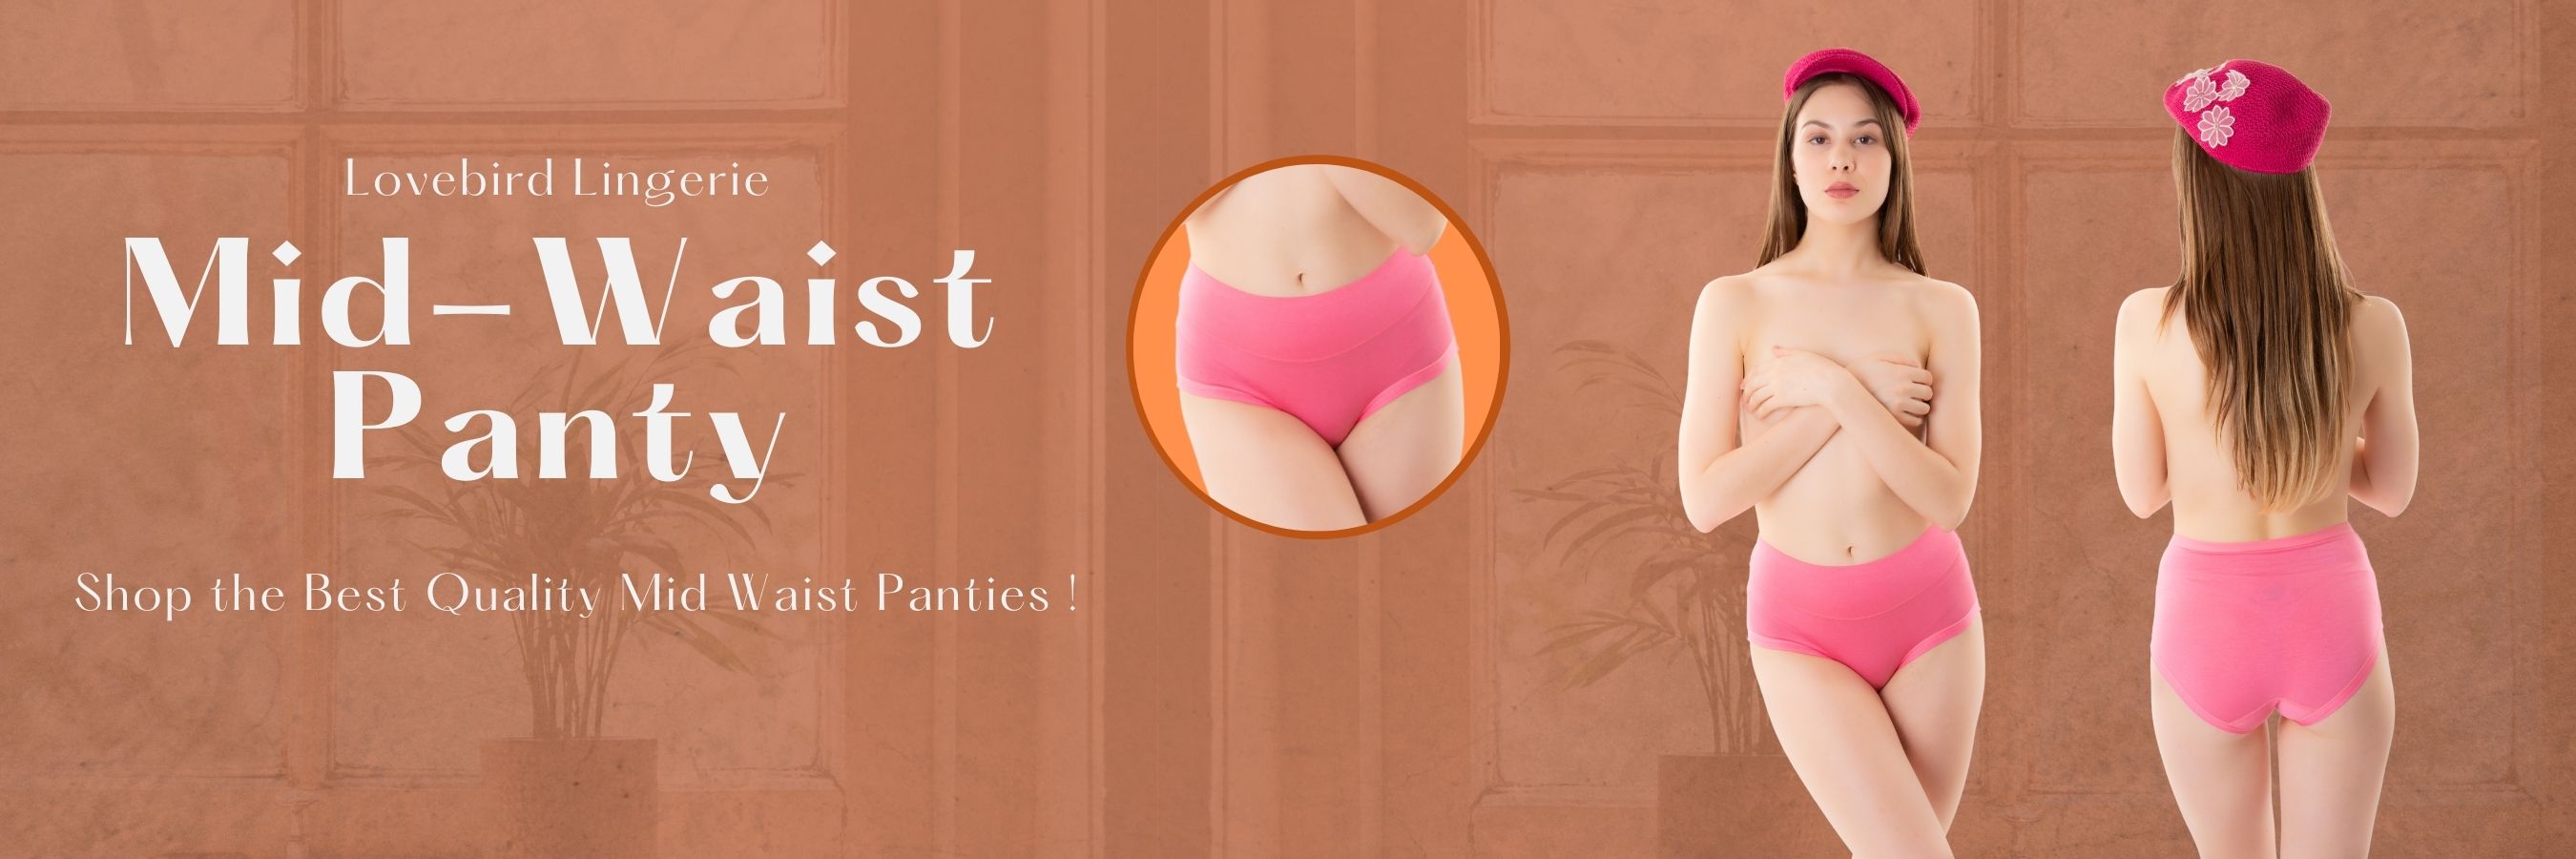 Buy mid waist panties online a banner lovebird